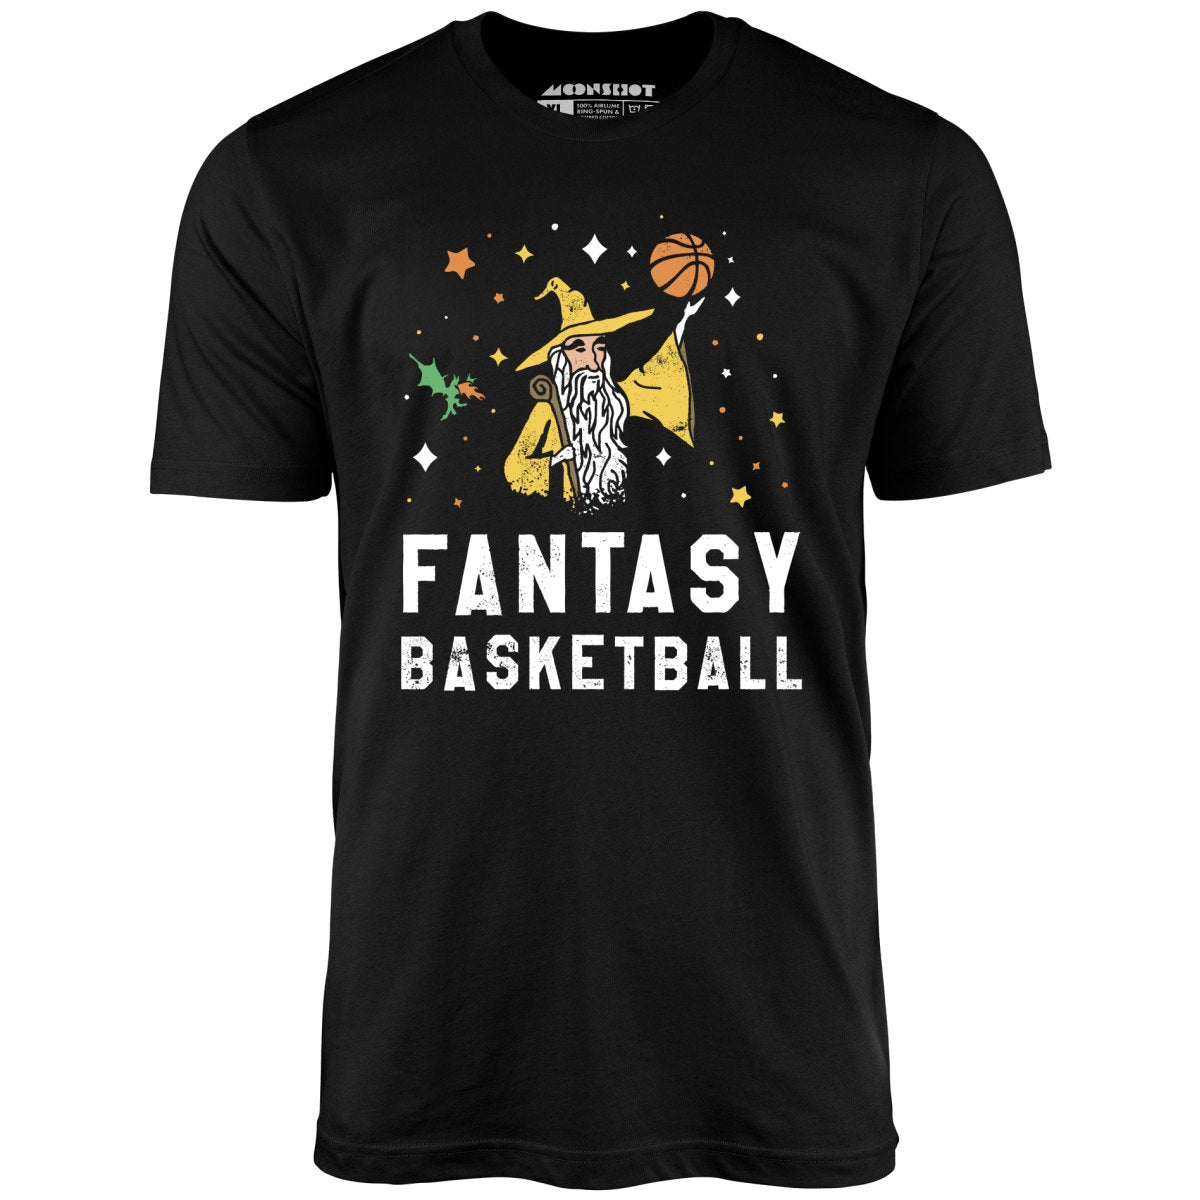 Fantasy Basketball - Unisex T-Shirt